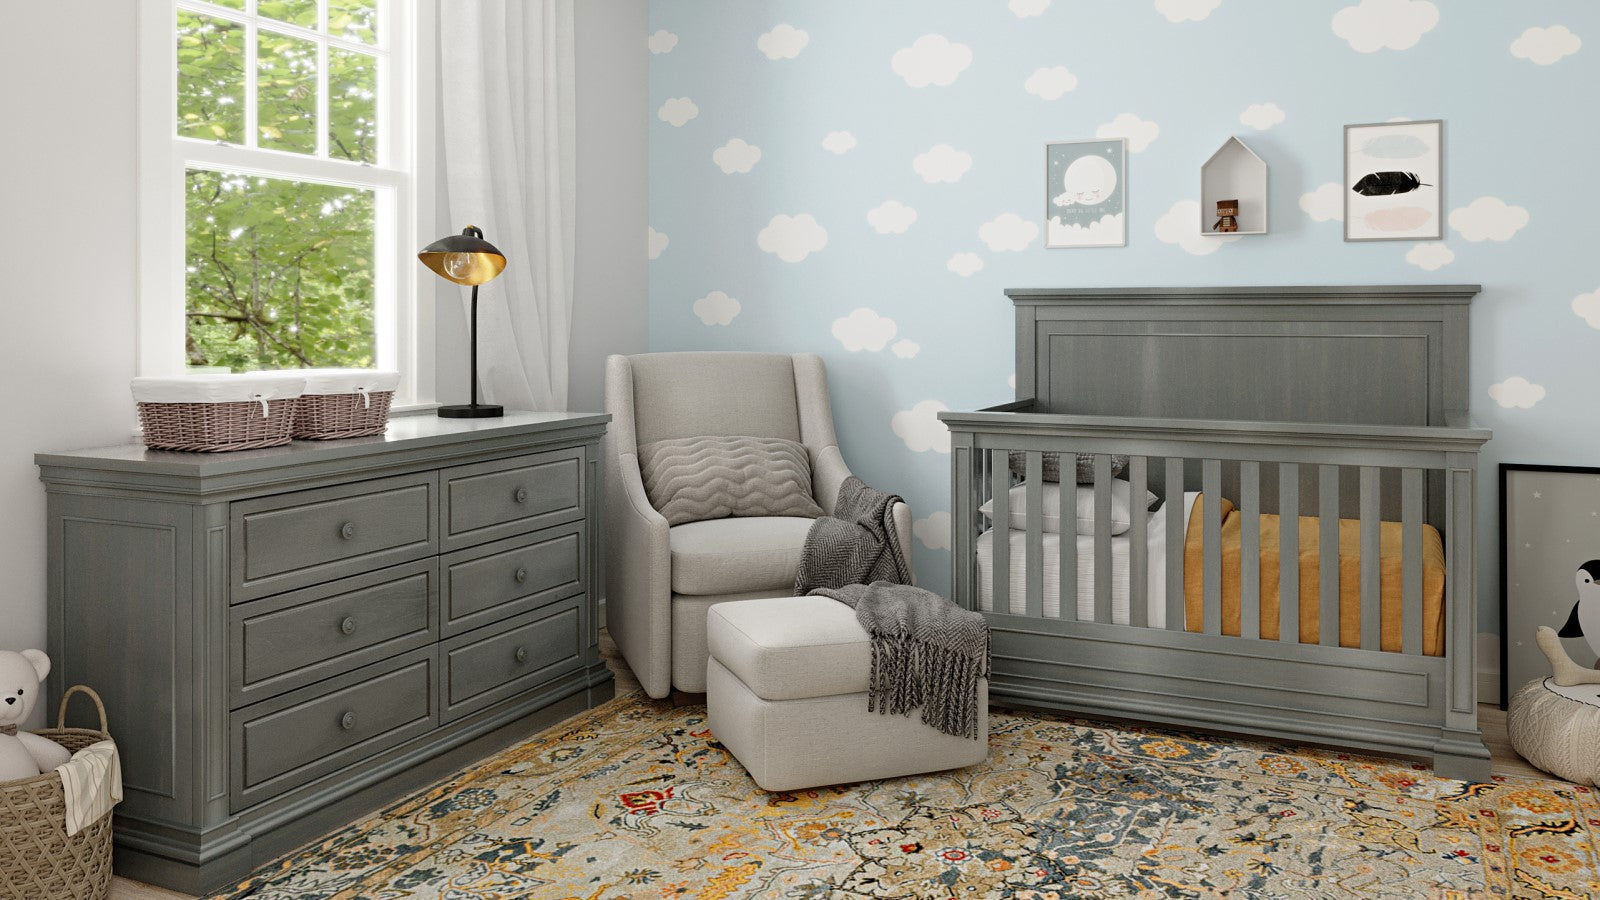 Best Baby Cribs - Nursery Guide